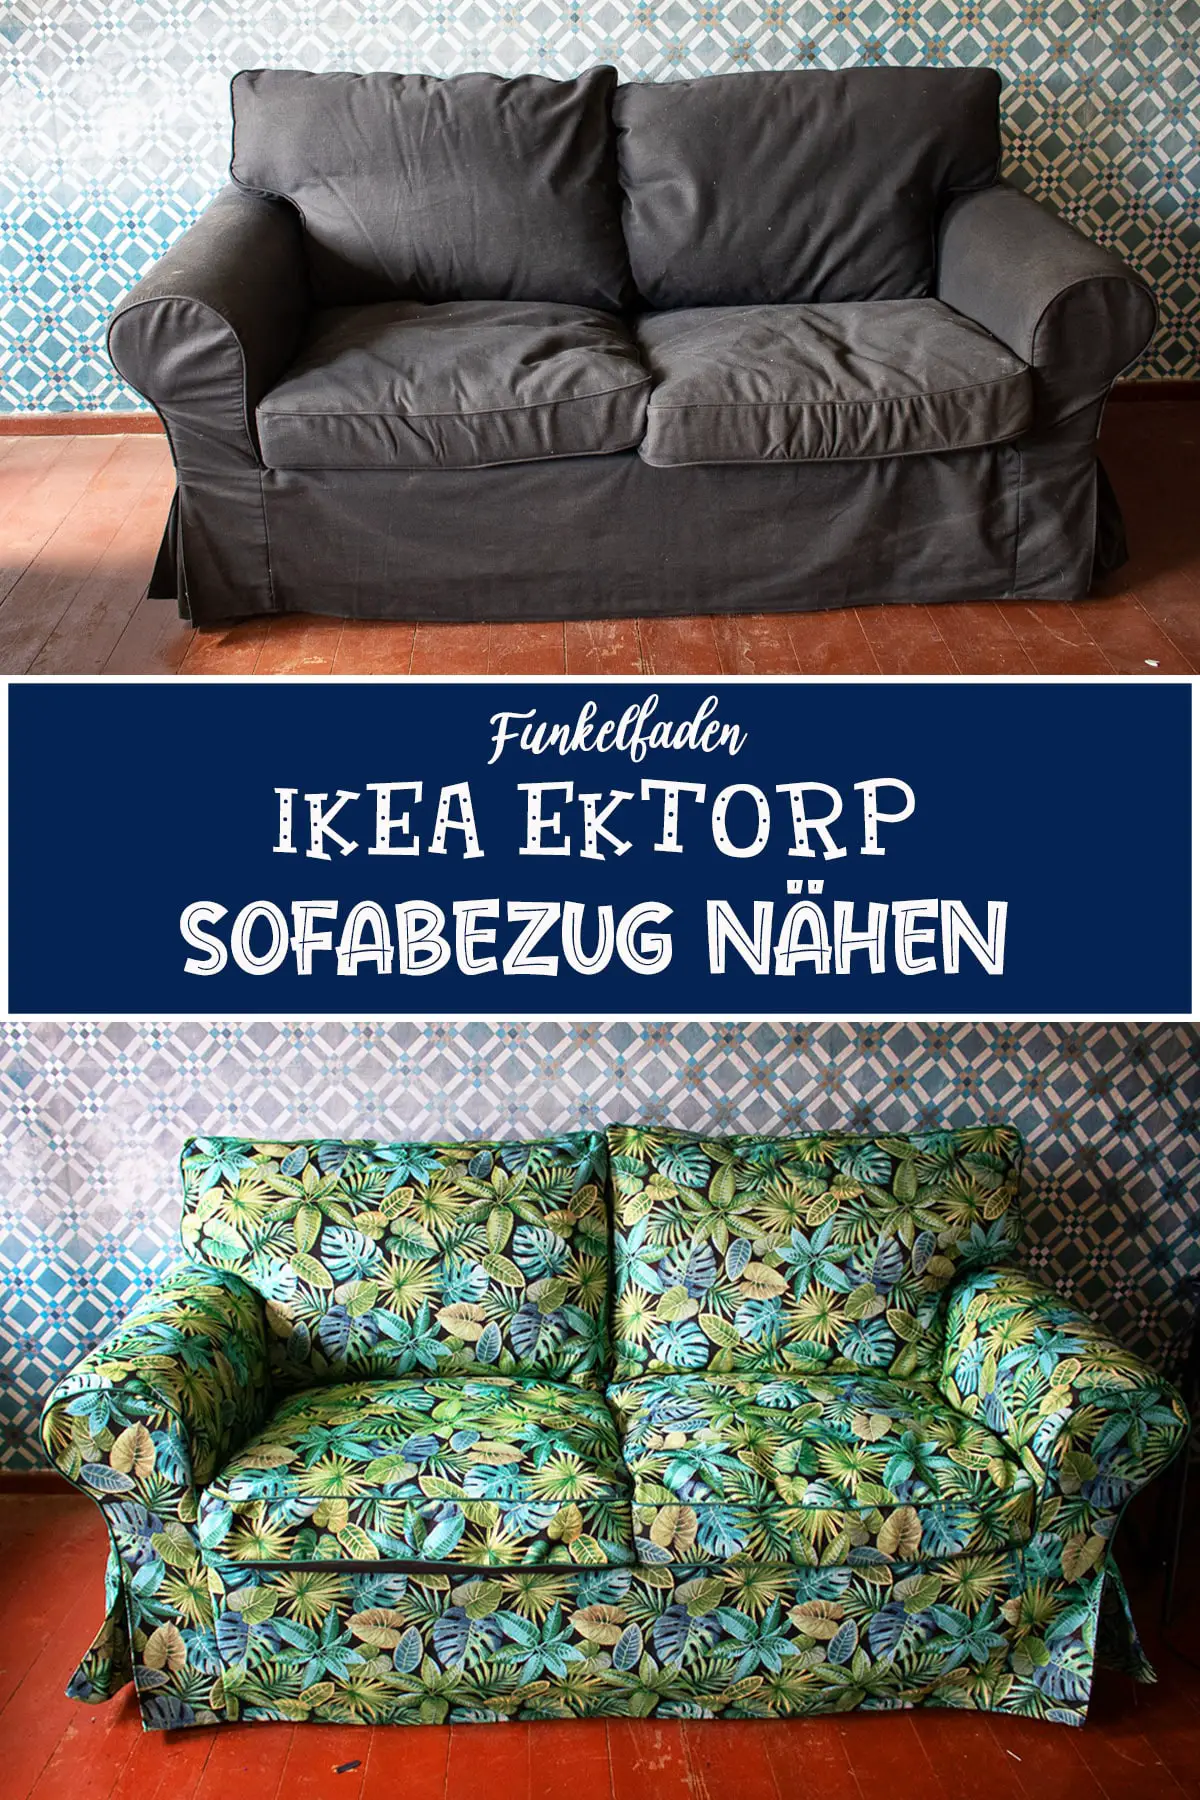 cliënt Terugspoelen lanthaan Anleitung Sofa beziehen - Sofa Bezug nähen für Ikea Ektorp